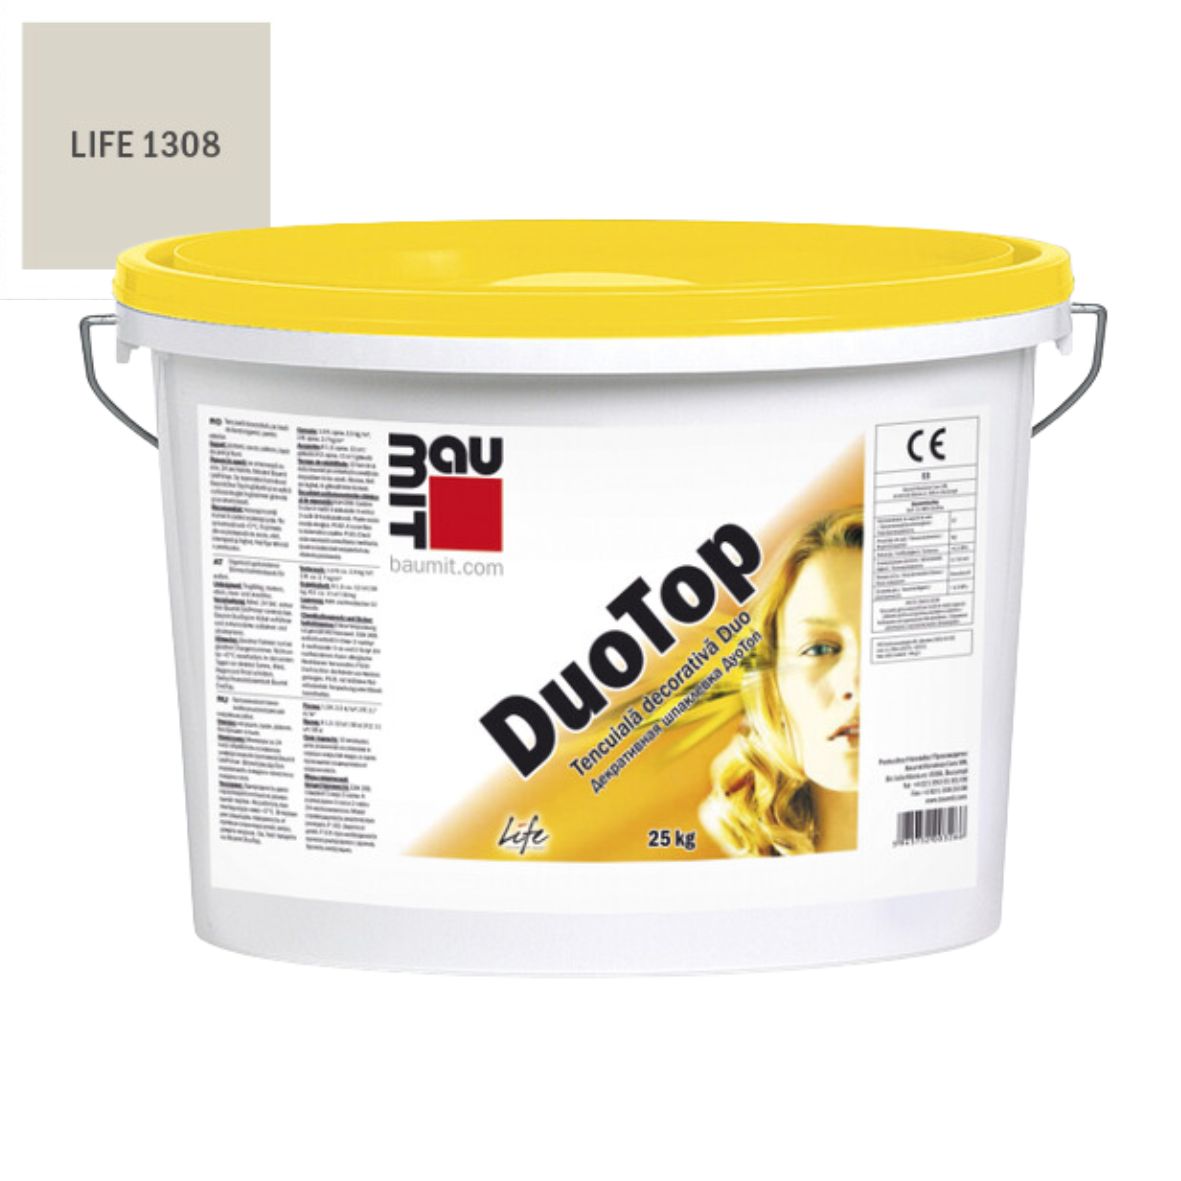 Decorative plasters - Baumit DuoTop RS 1.5K decorative plaster (color code 1308) 25KG, https:maxbau.ro